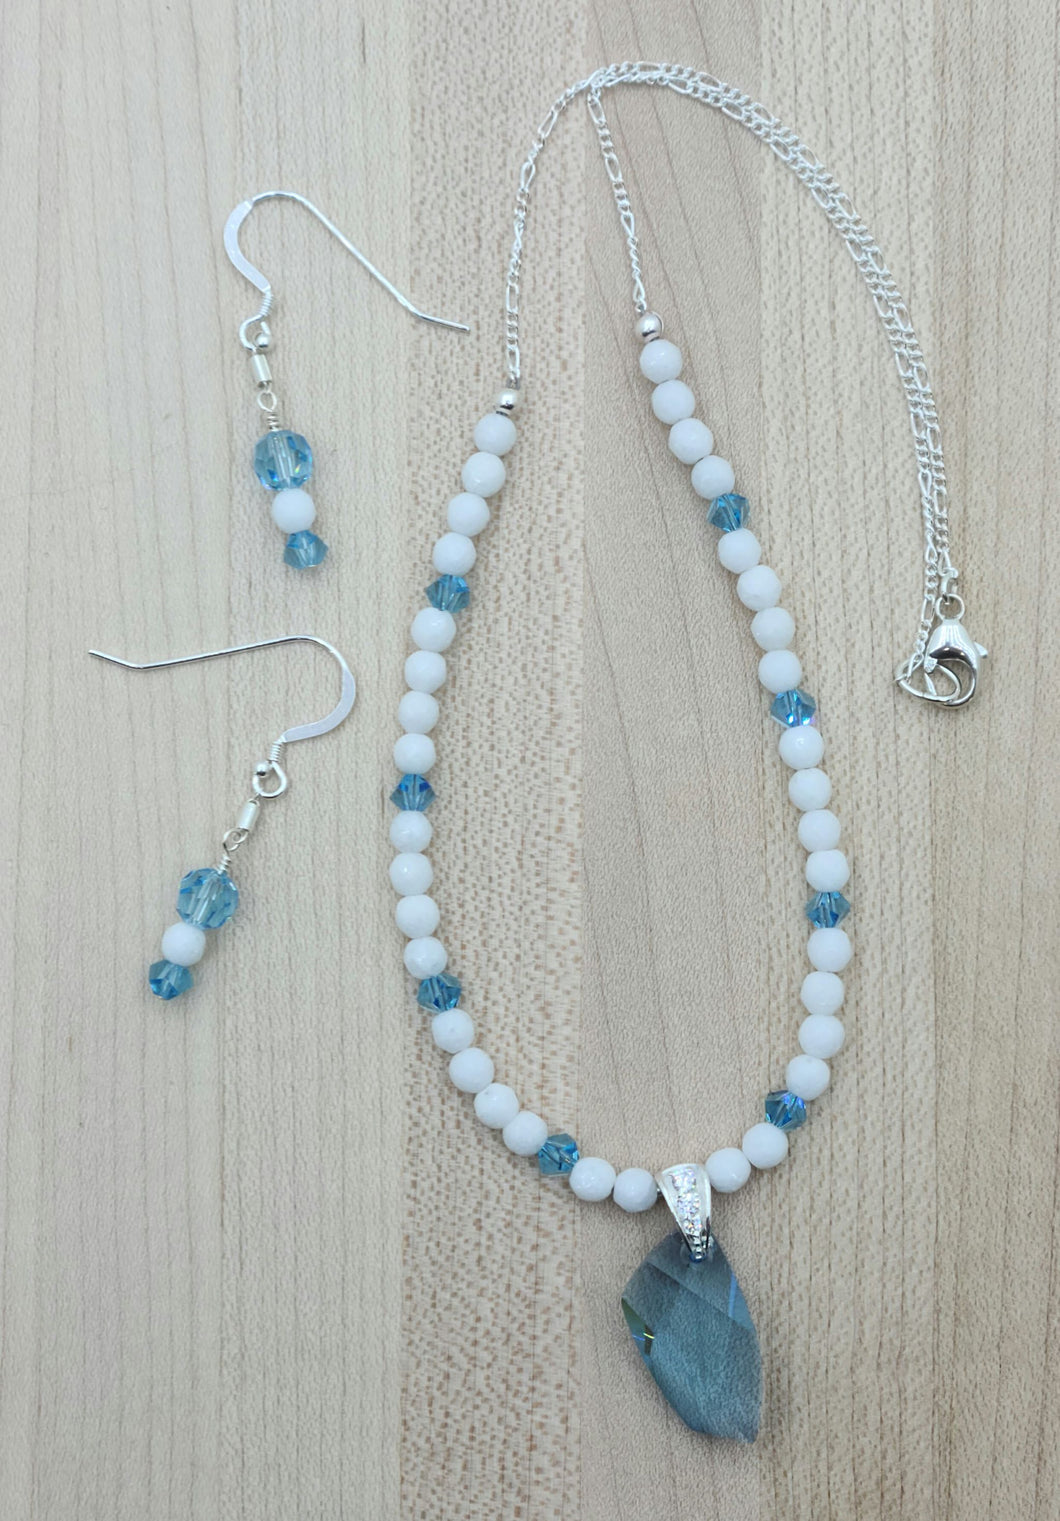 Aquamarine & White Jade Necklace & Earrings